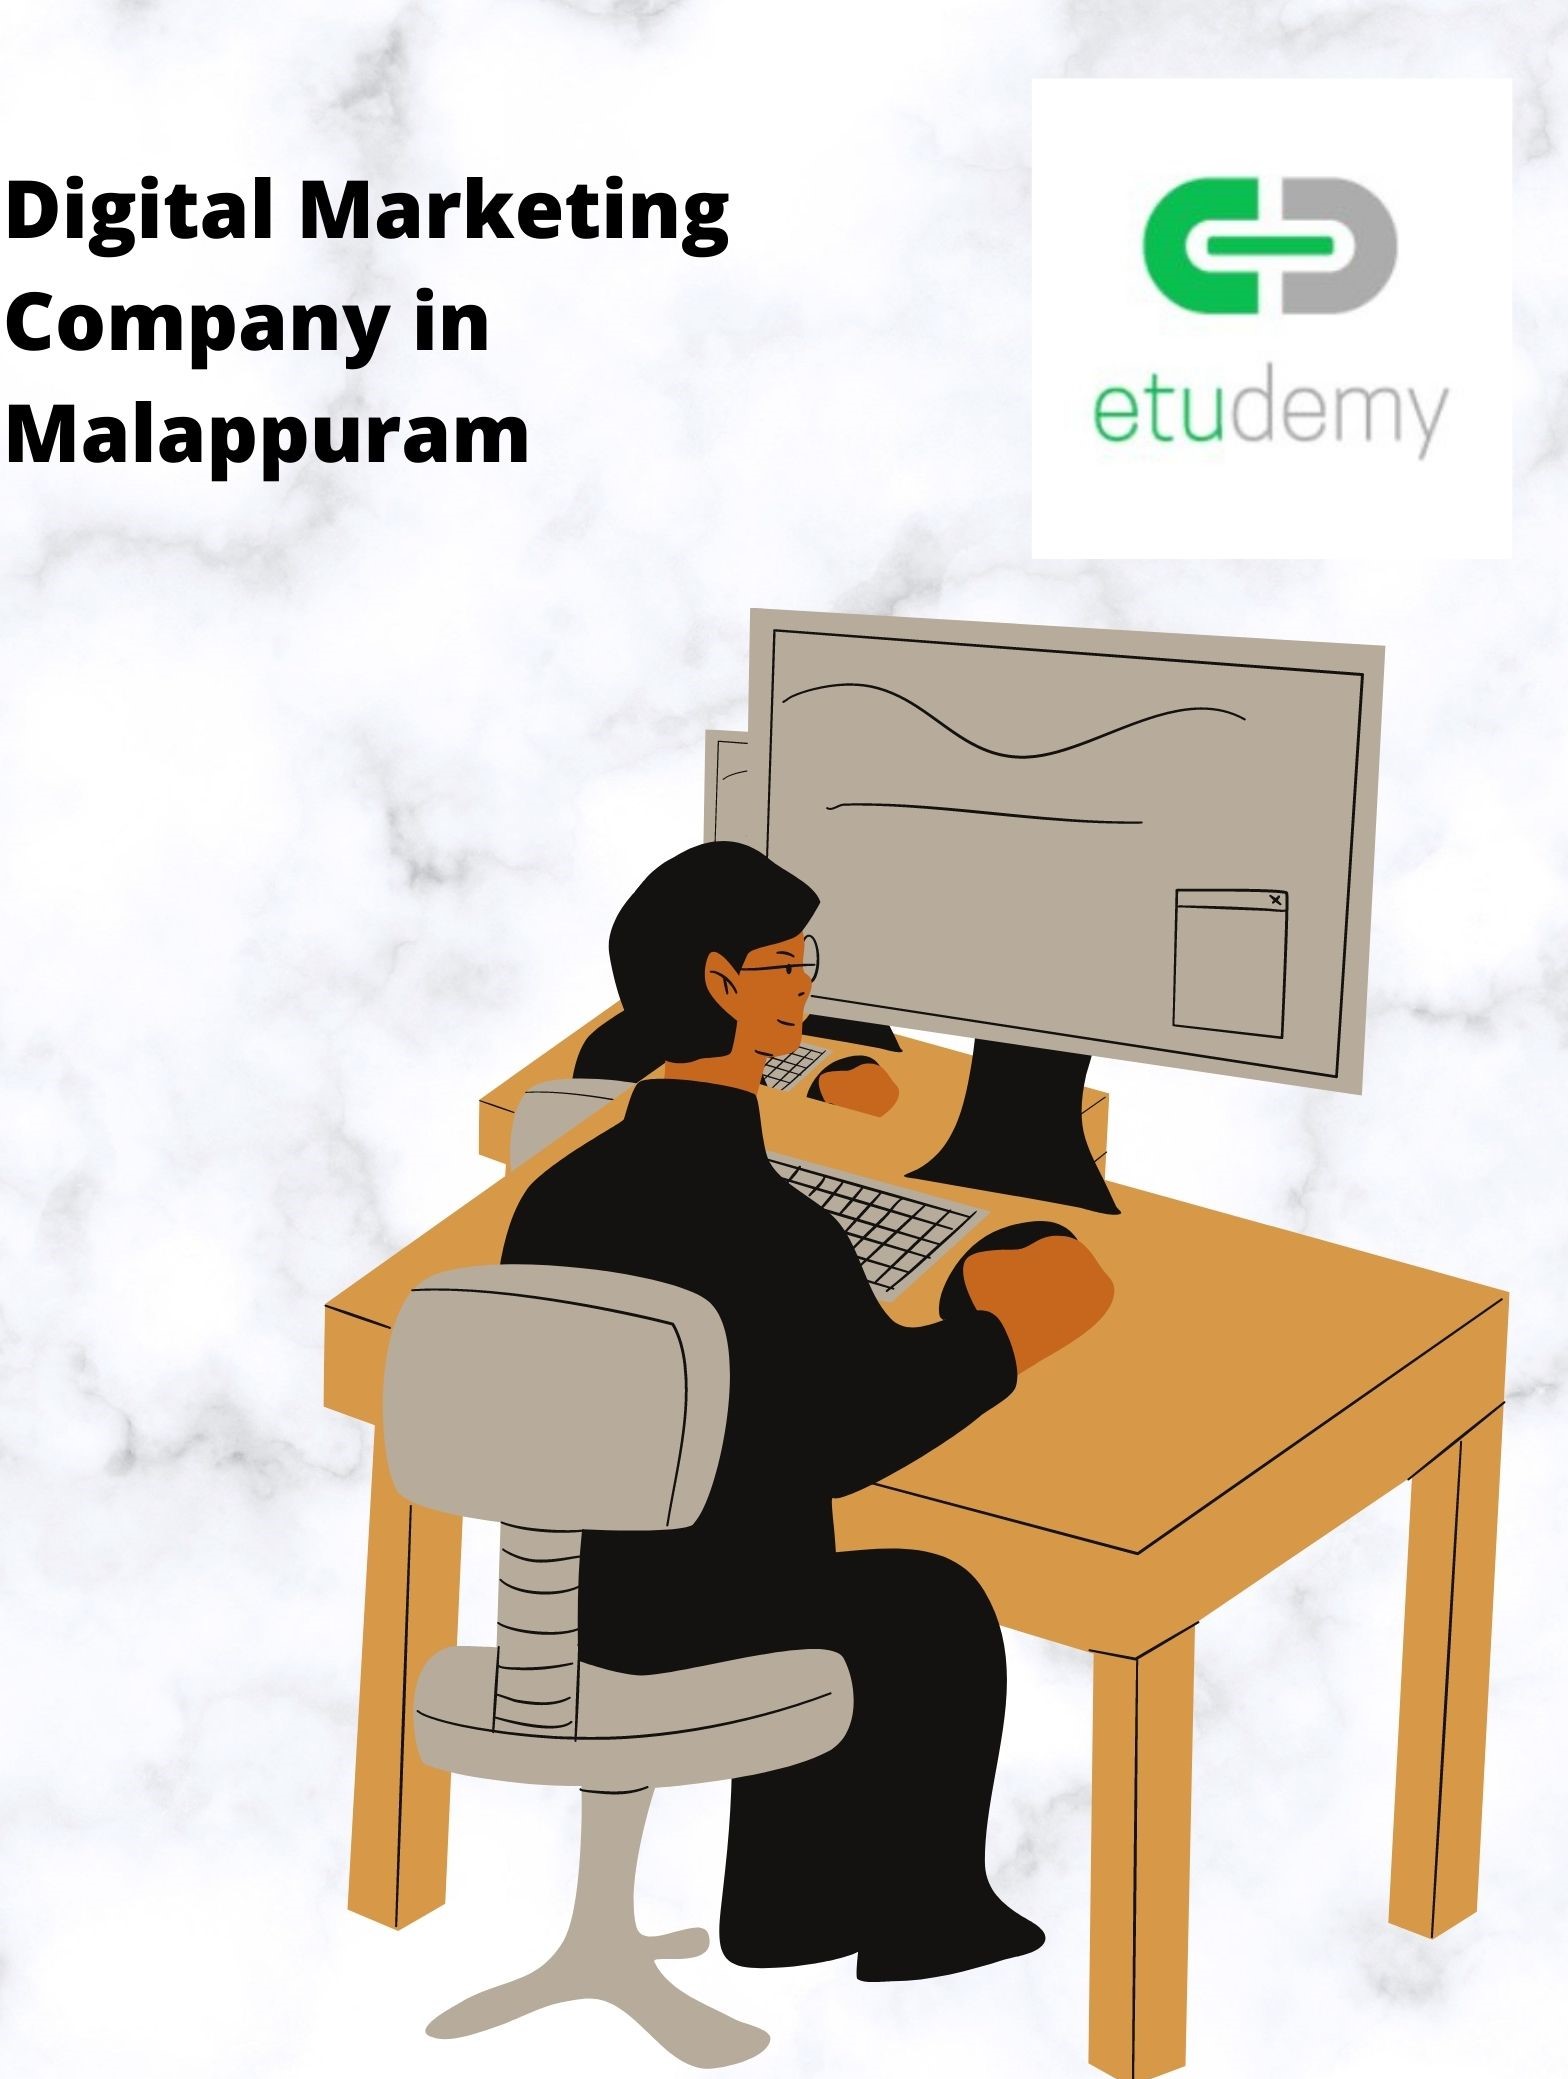 Digital Marketing company in Malappuram